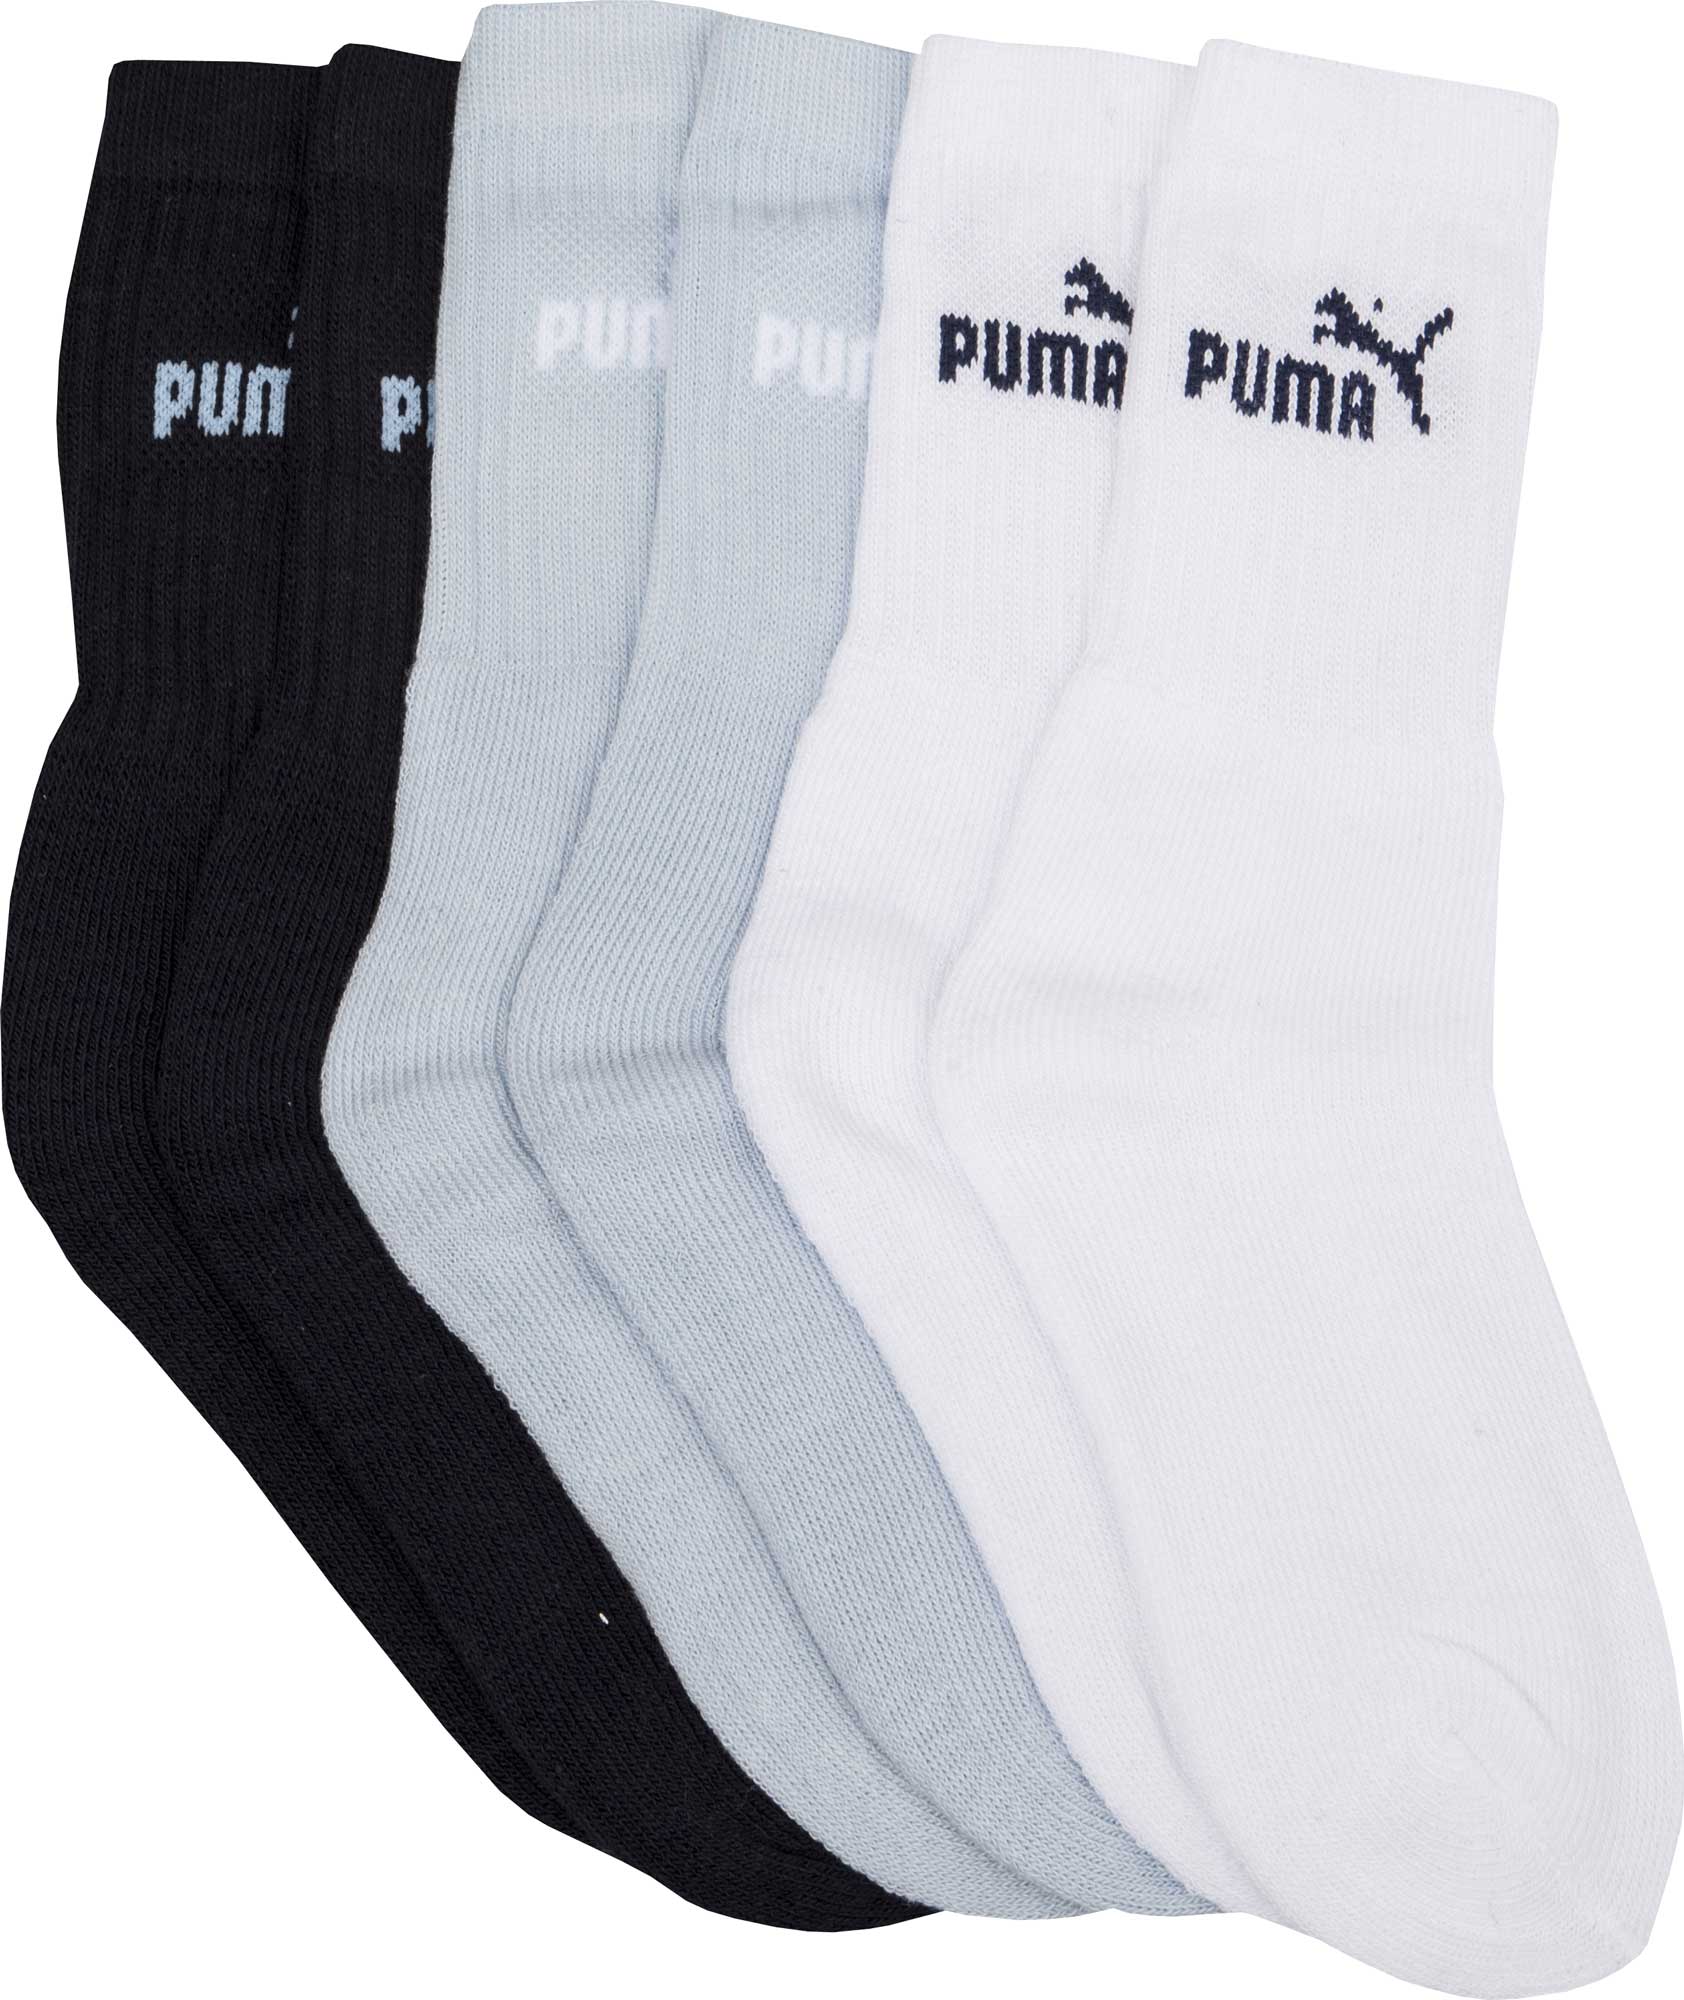 children's puma socks